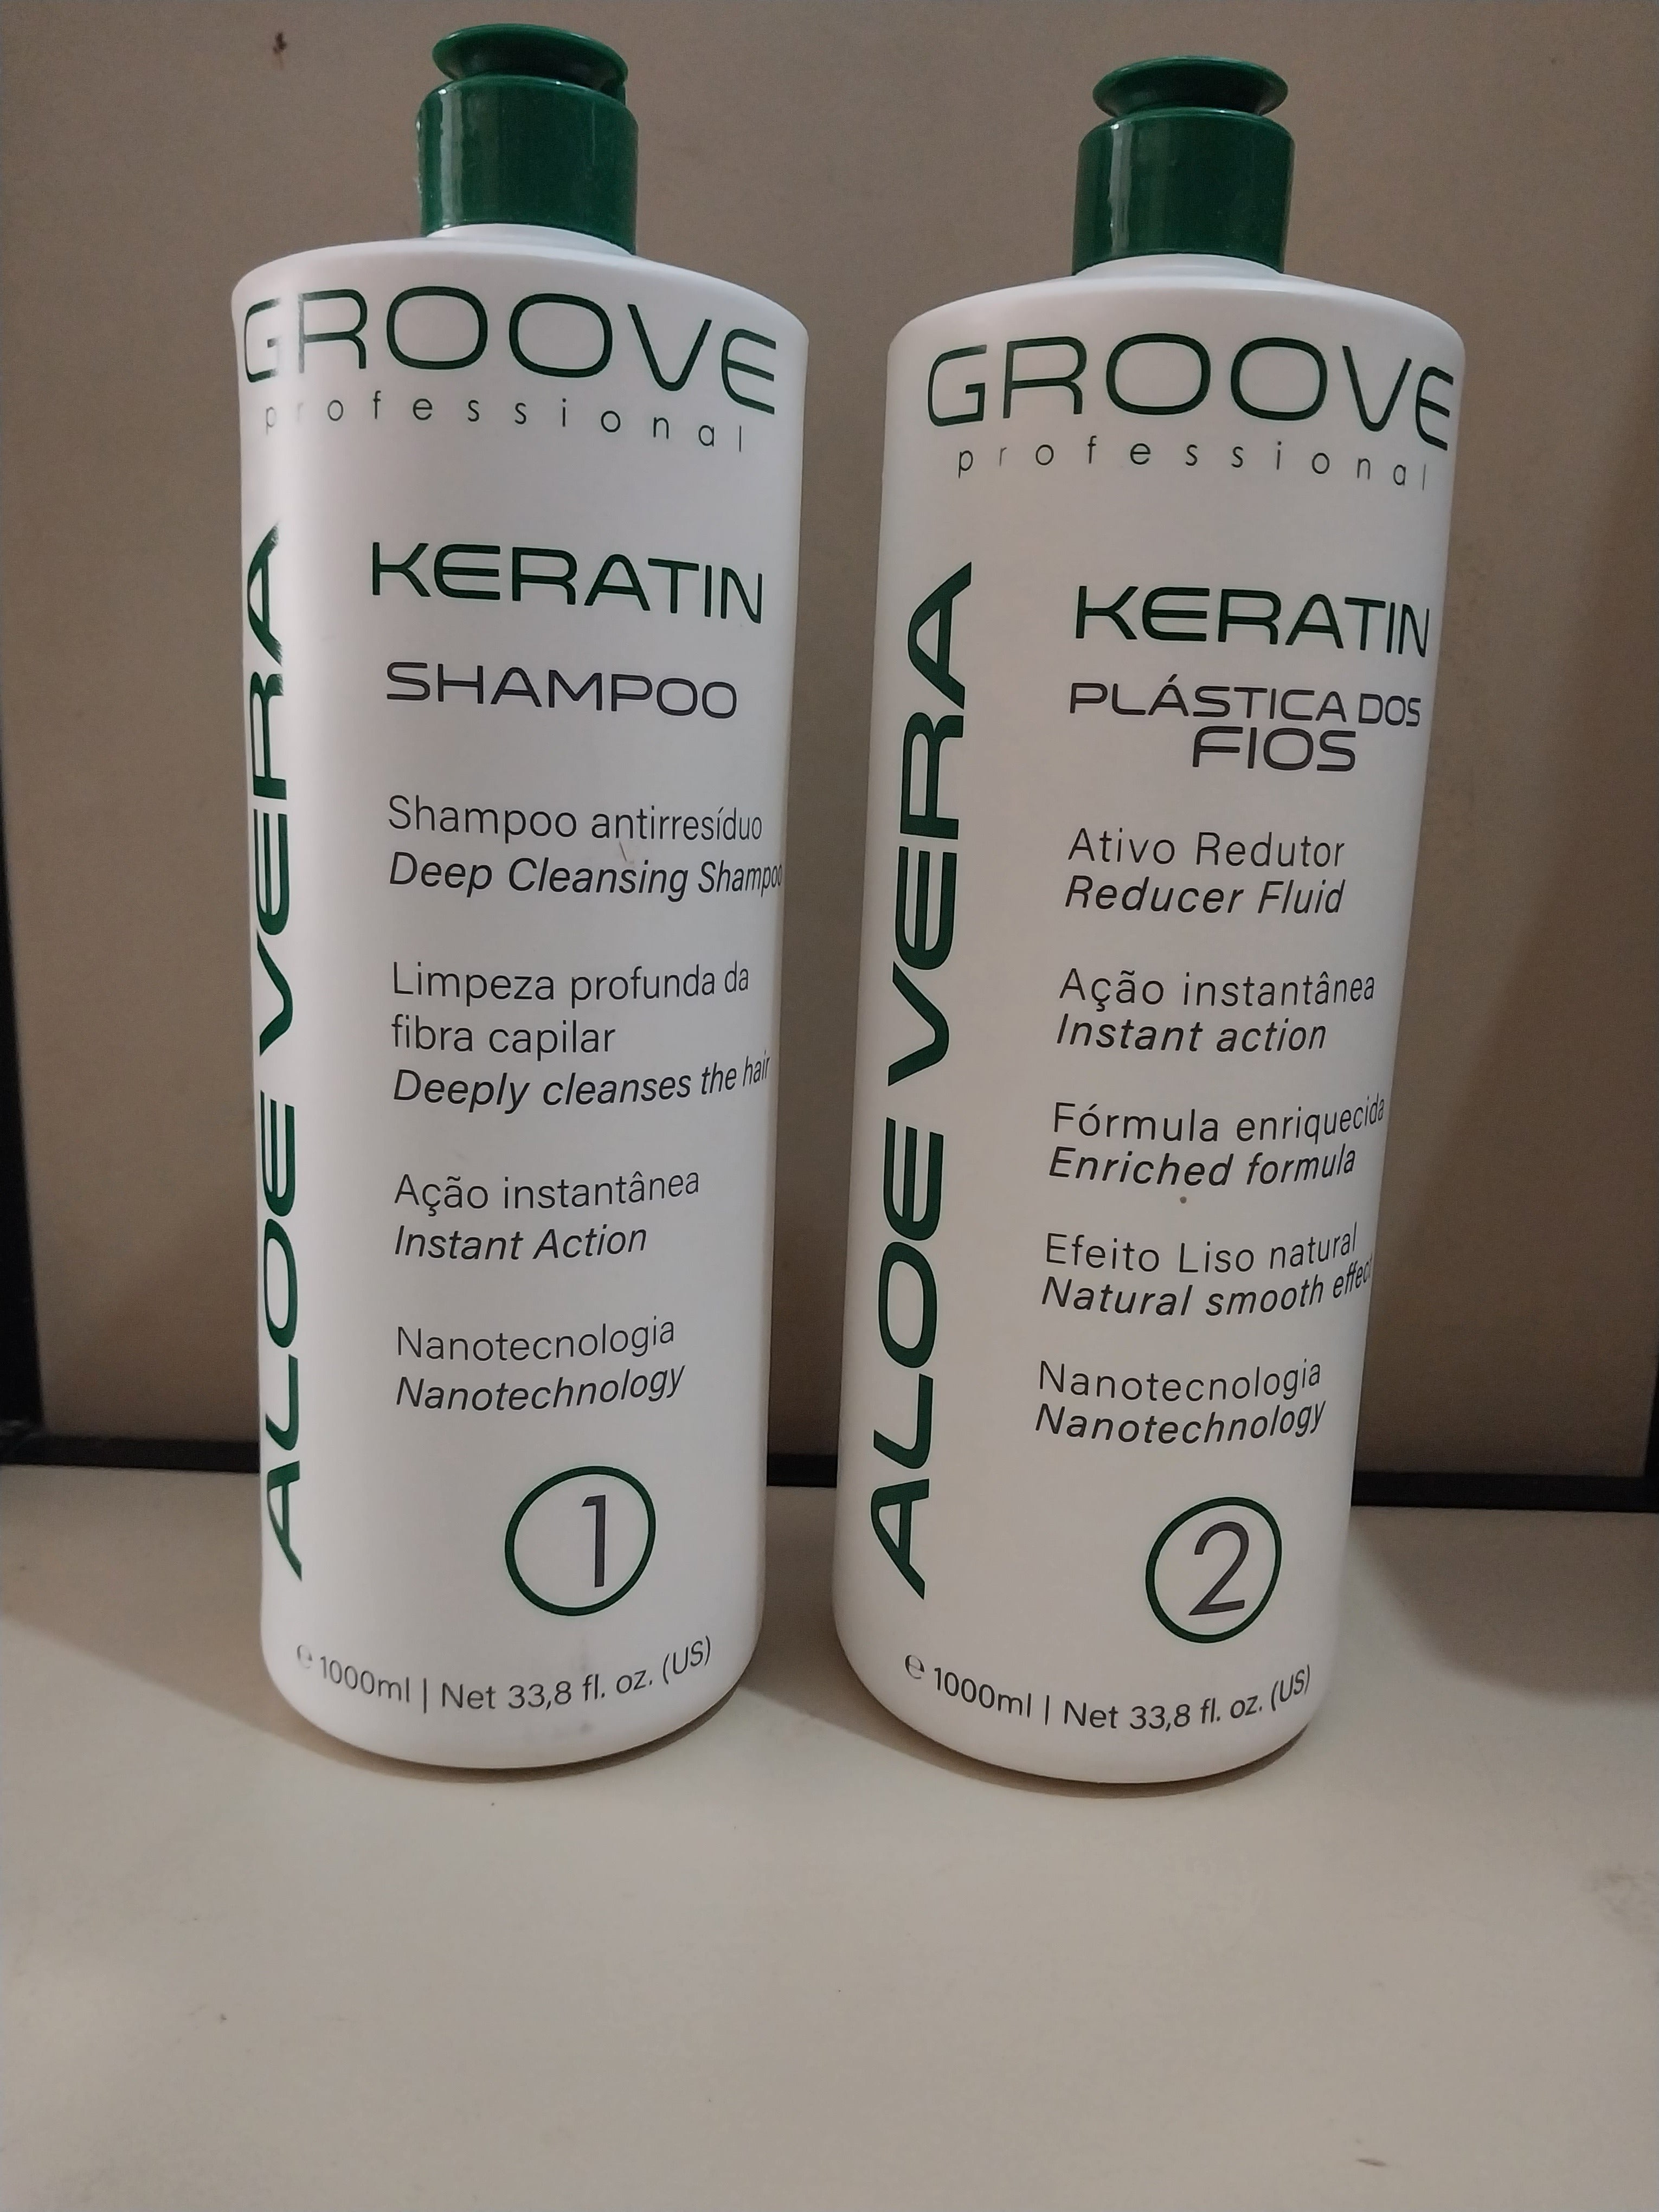 Groove Hair Straighteners Keratin Babosa Aloe Vera Progressive Brush Smoothing Treatment Kit 2x1L - Groove